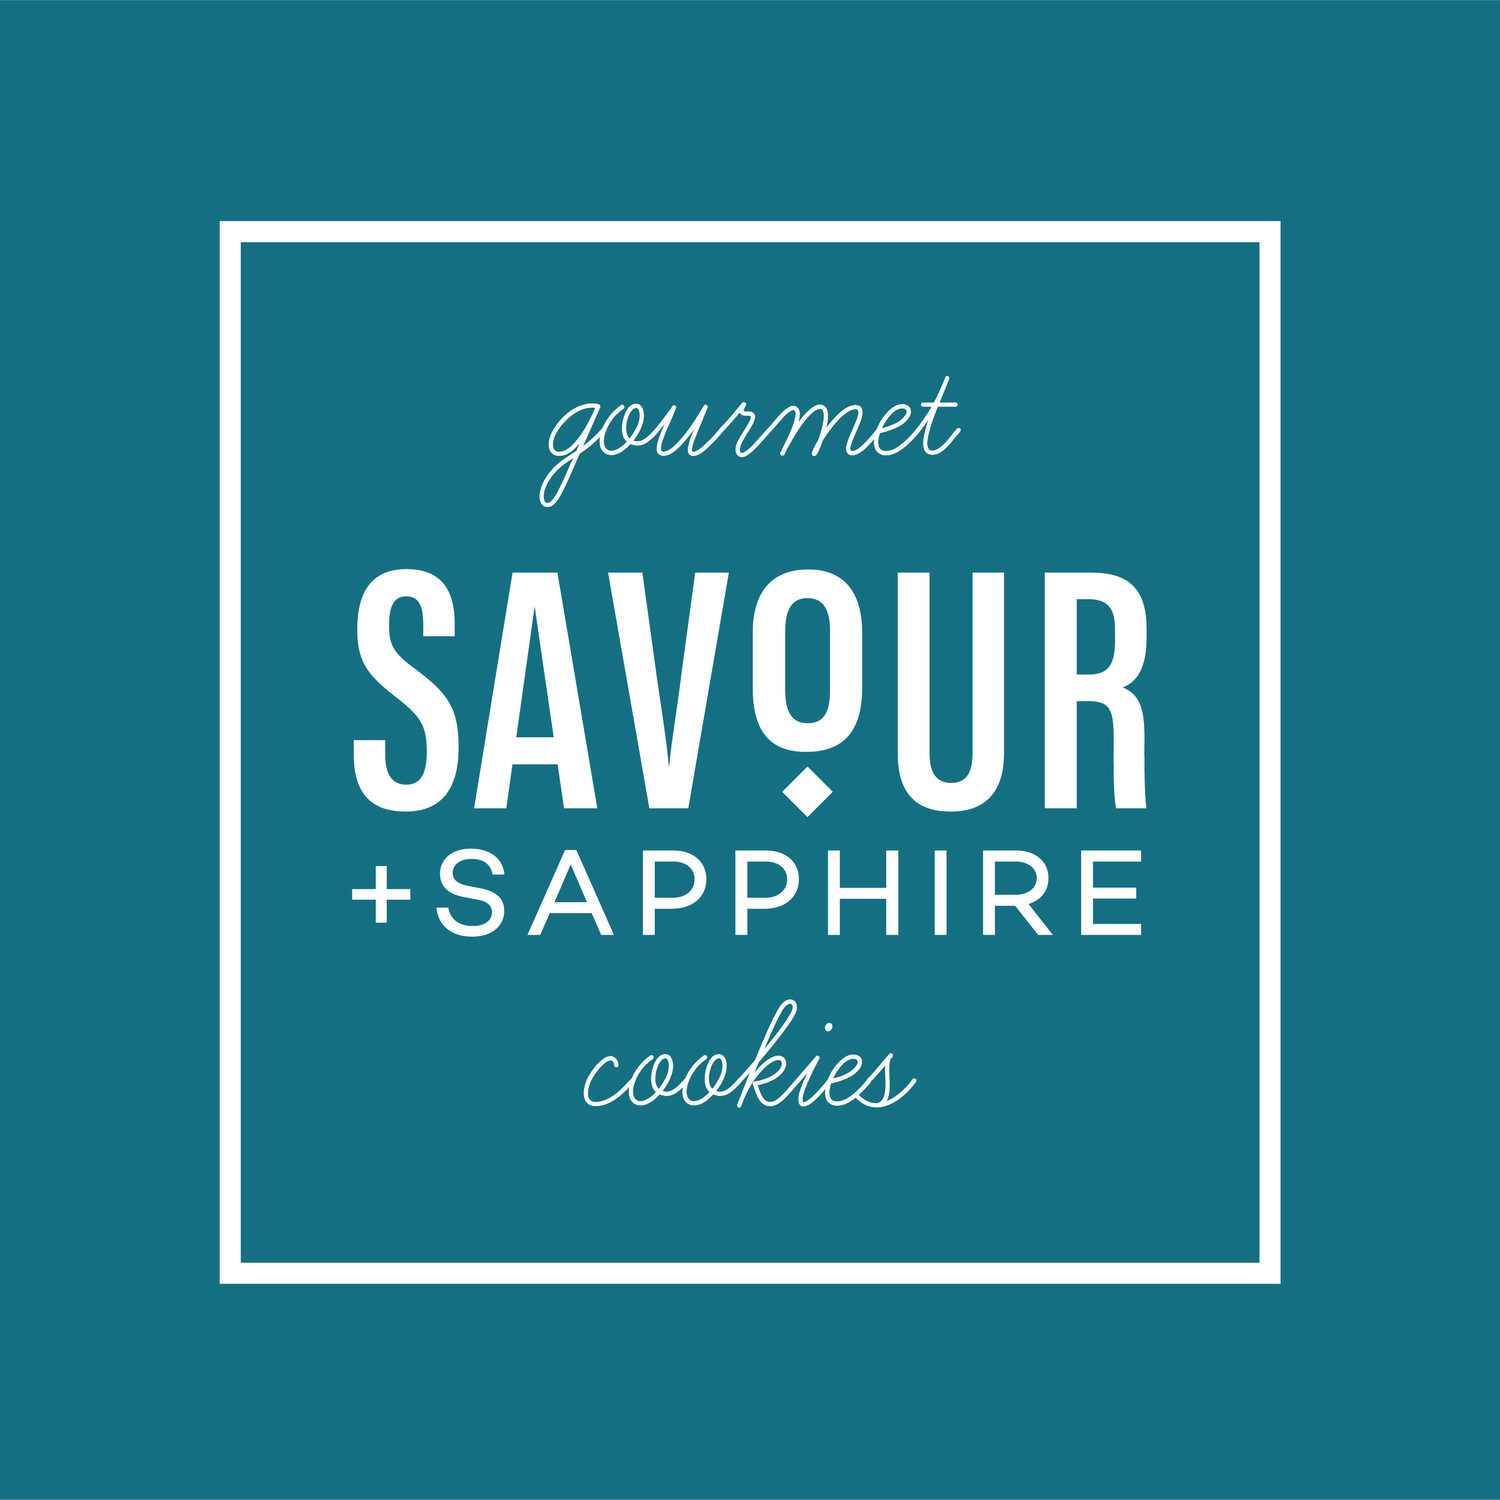 Savour + Sapphire